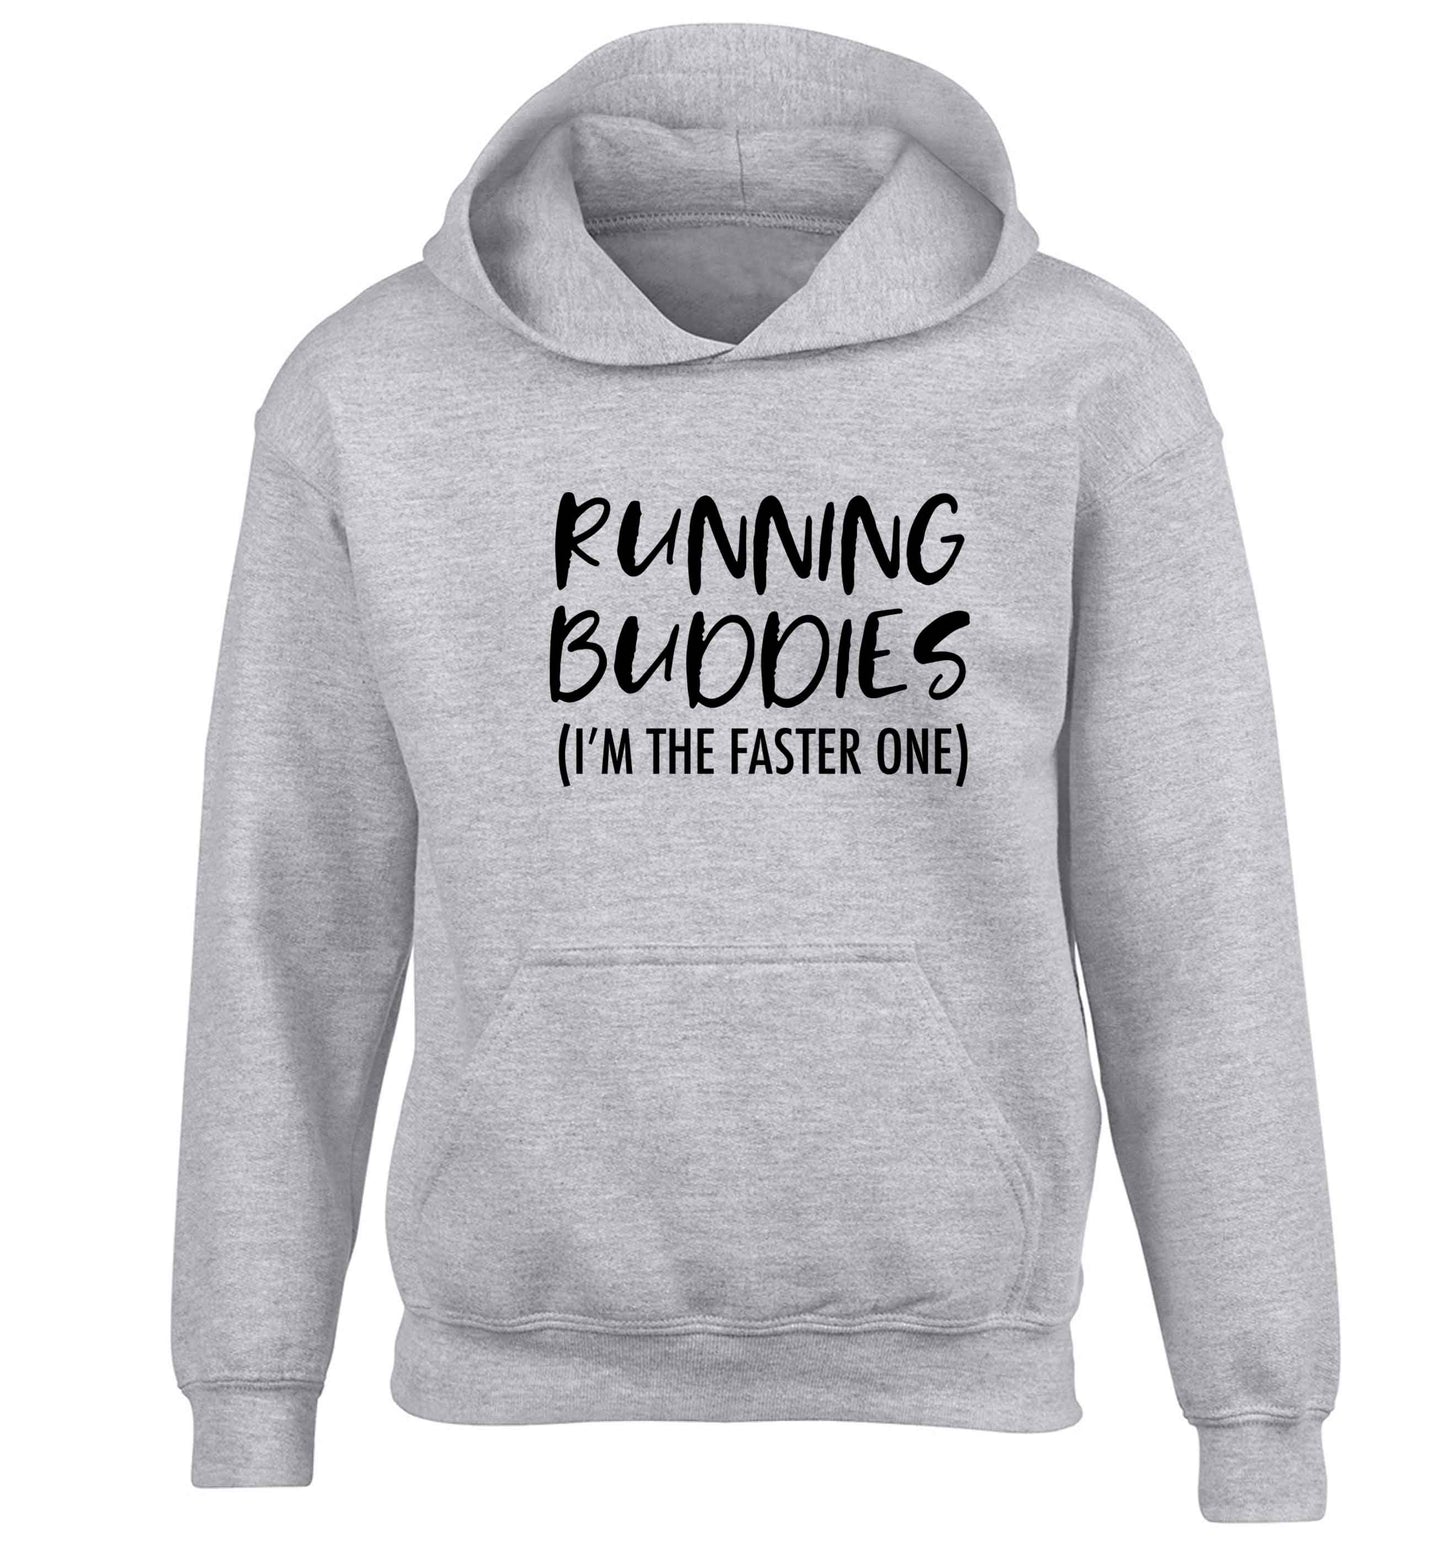 Running buddies (I'm the faster one) children's grey hoodie 12-13 Years